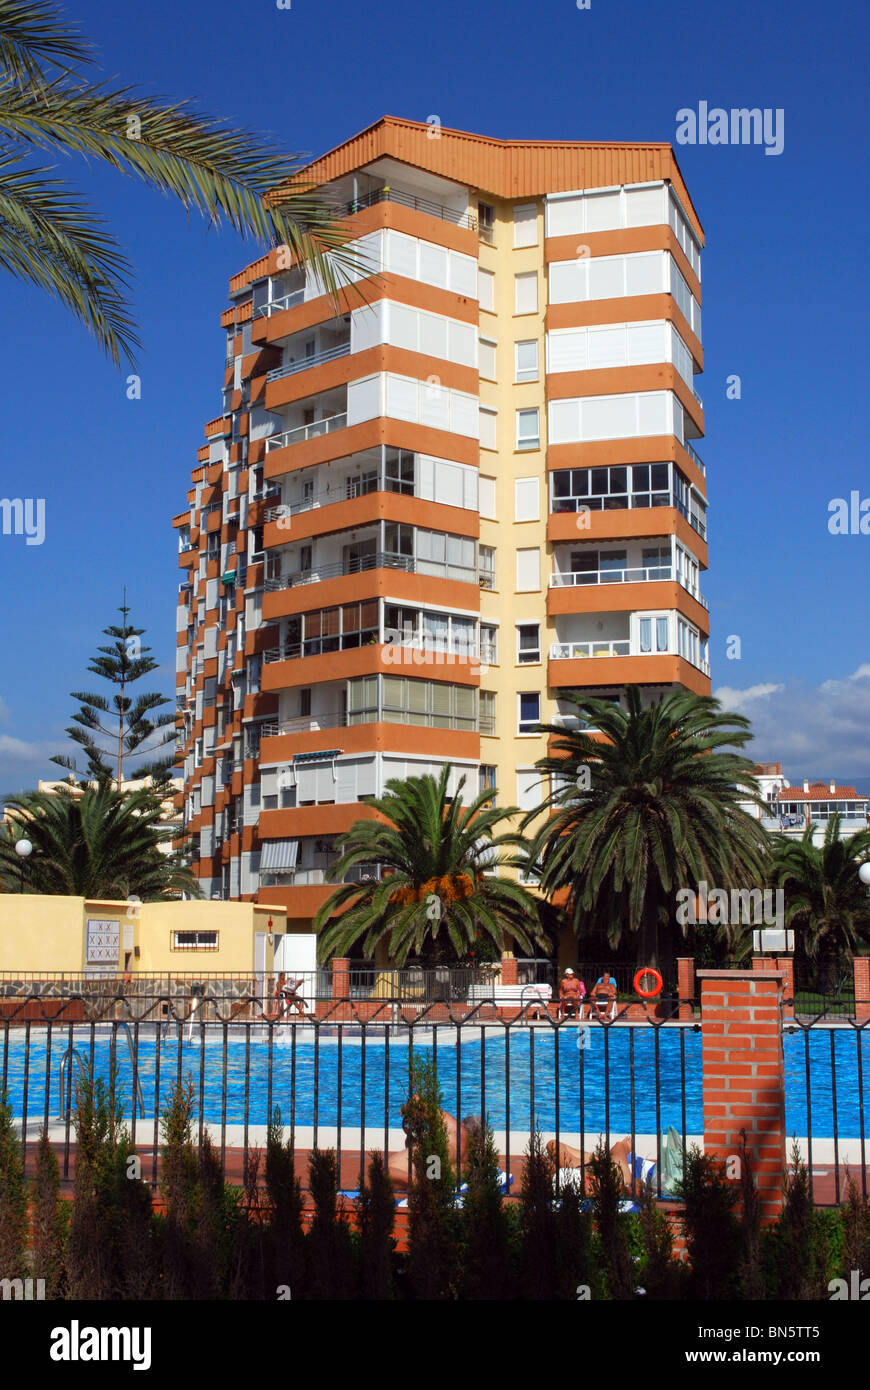 Apartment block with swimming pool in foreground, Lagos, Algarrobo Costa, Costa del Sol, Malaga Province, Andalucia, Spain. Stock Photo